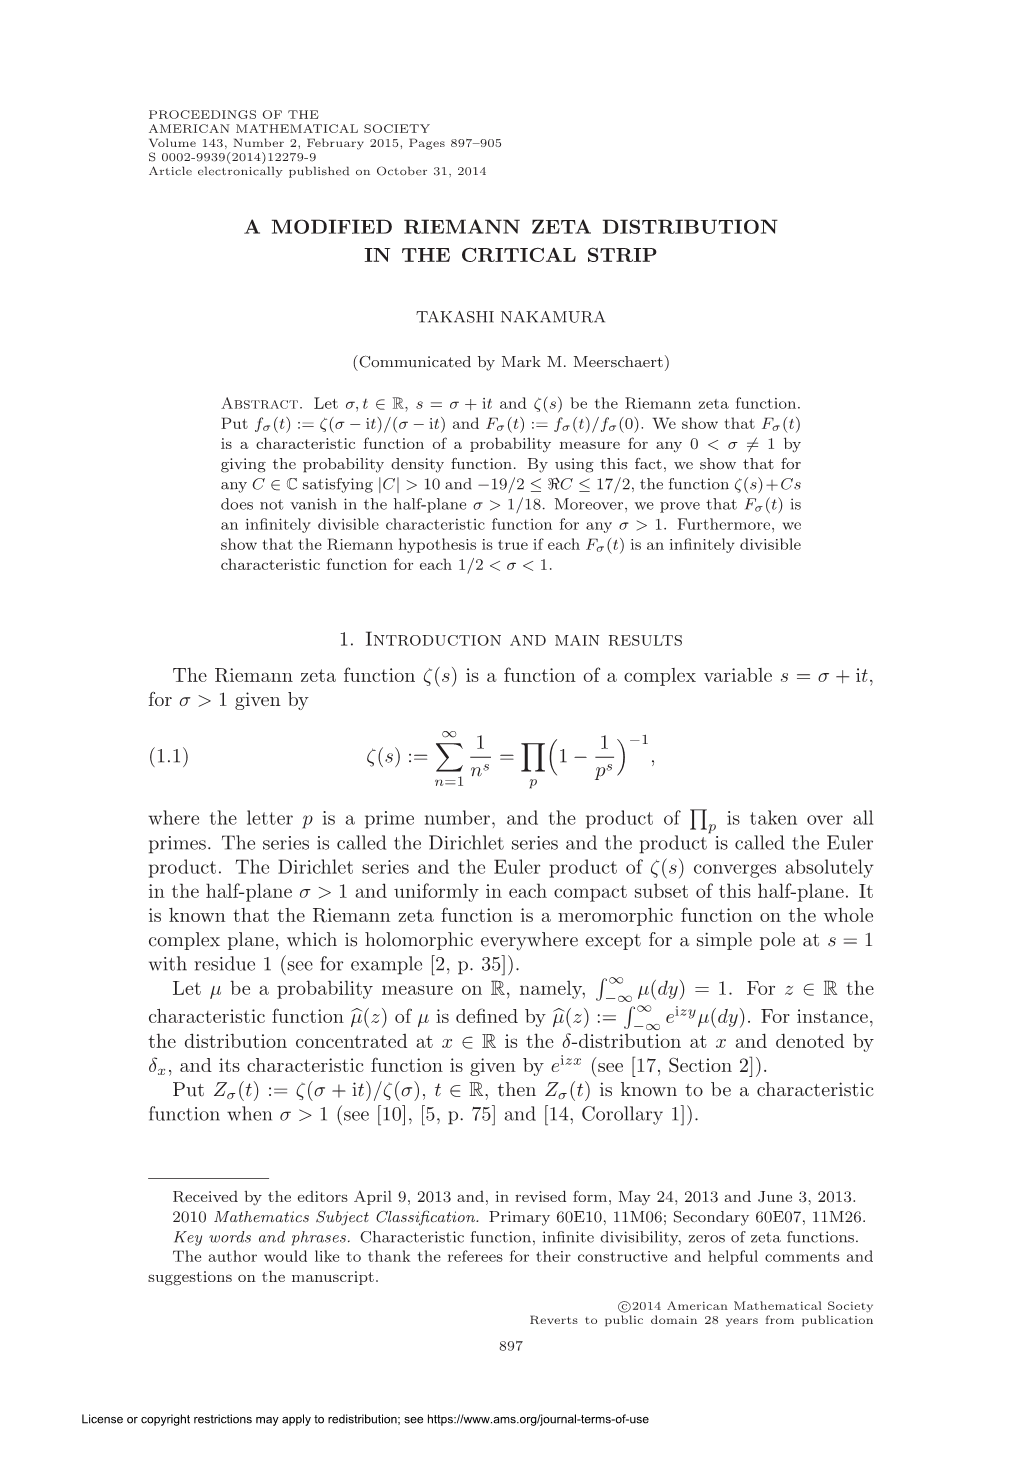 A Modified Riemann Zeta Distribution in the Critical Strip